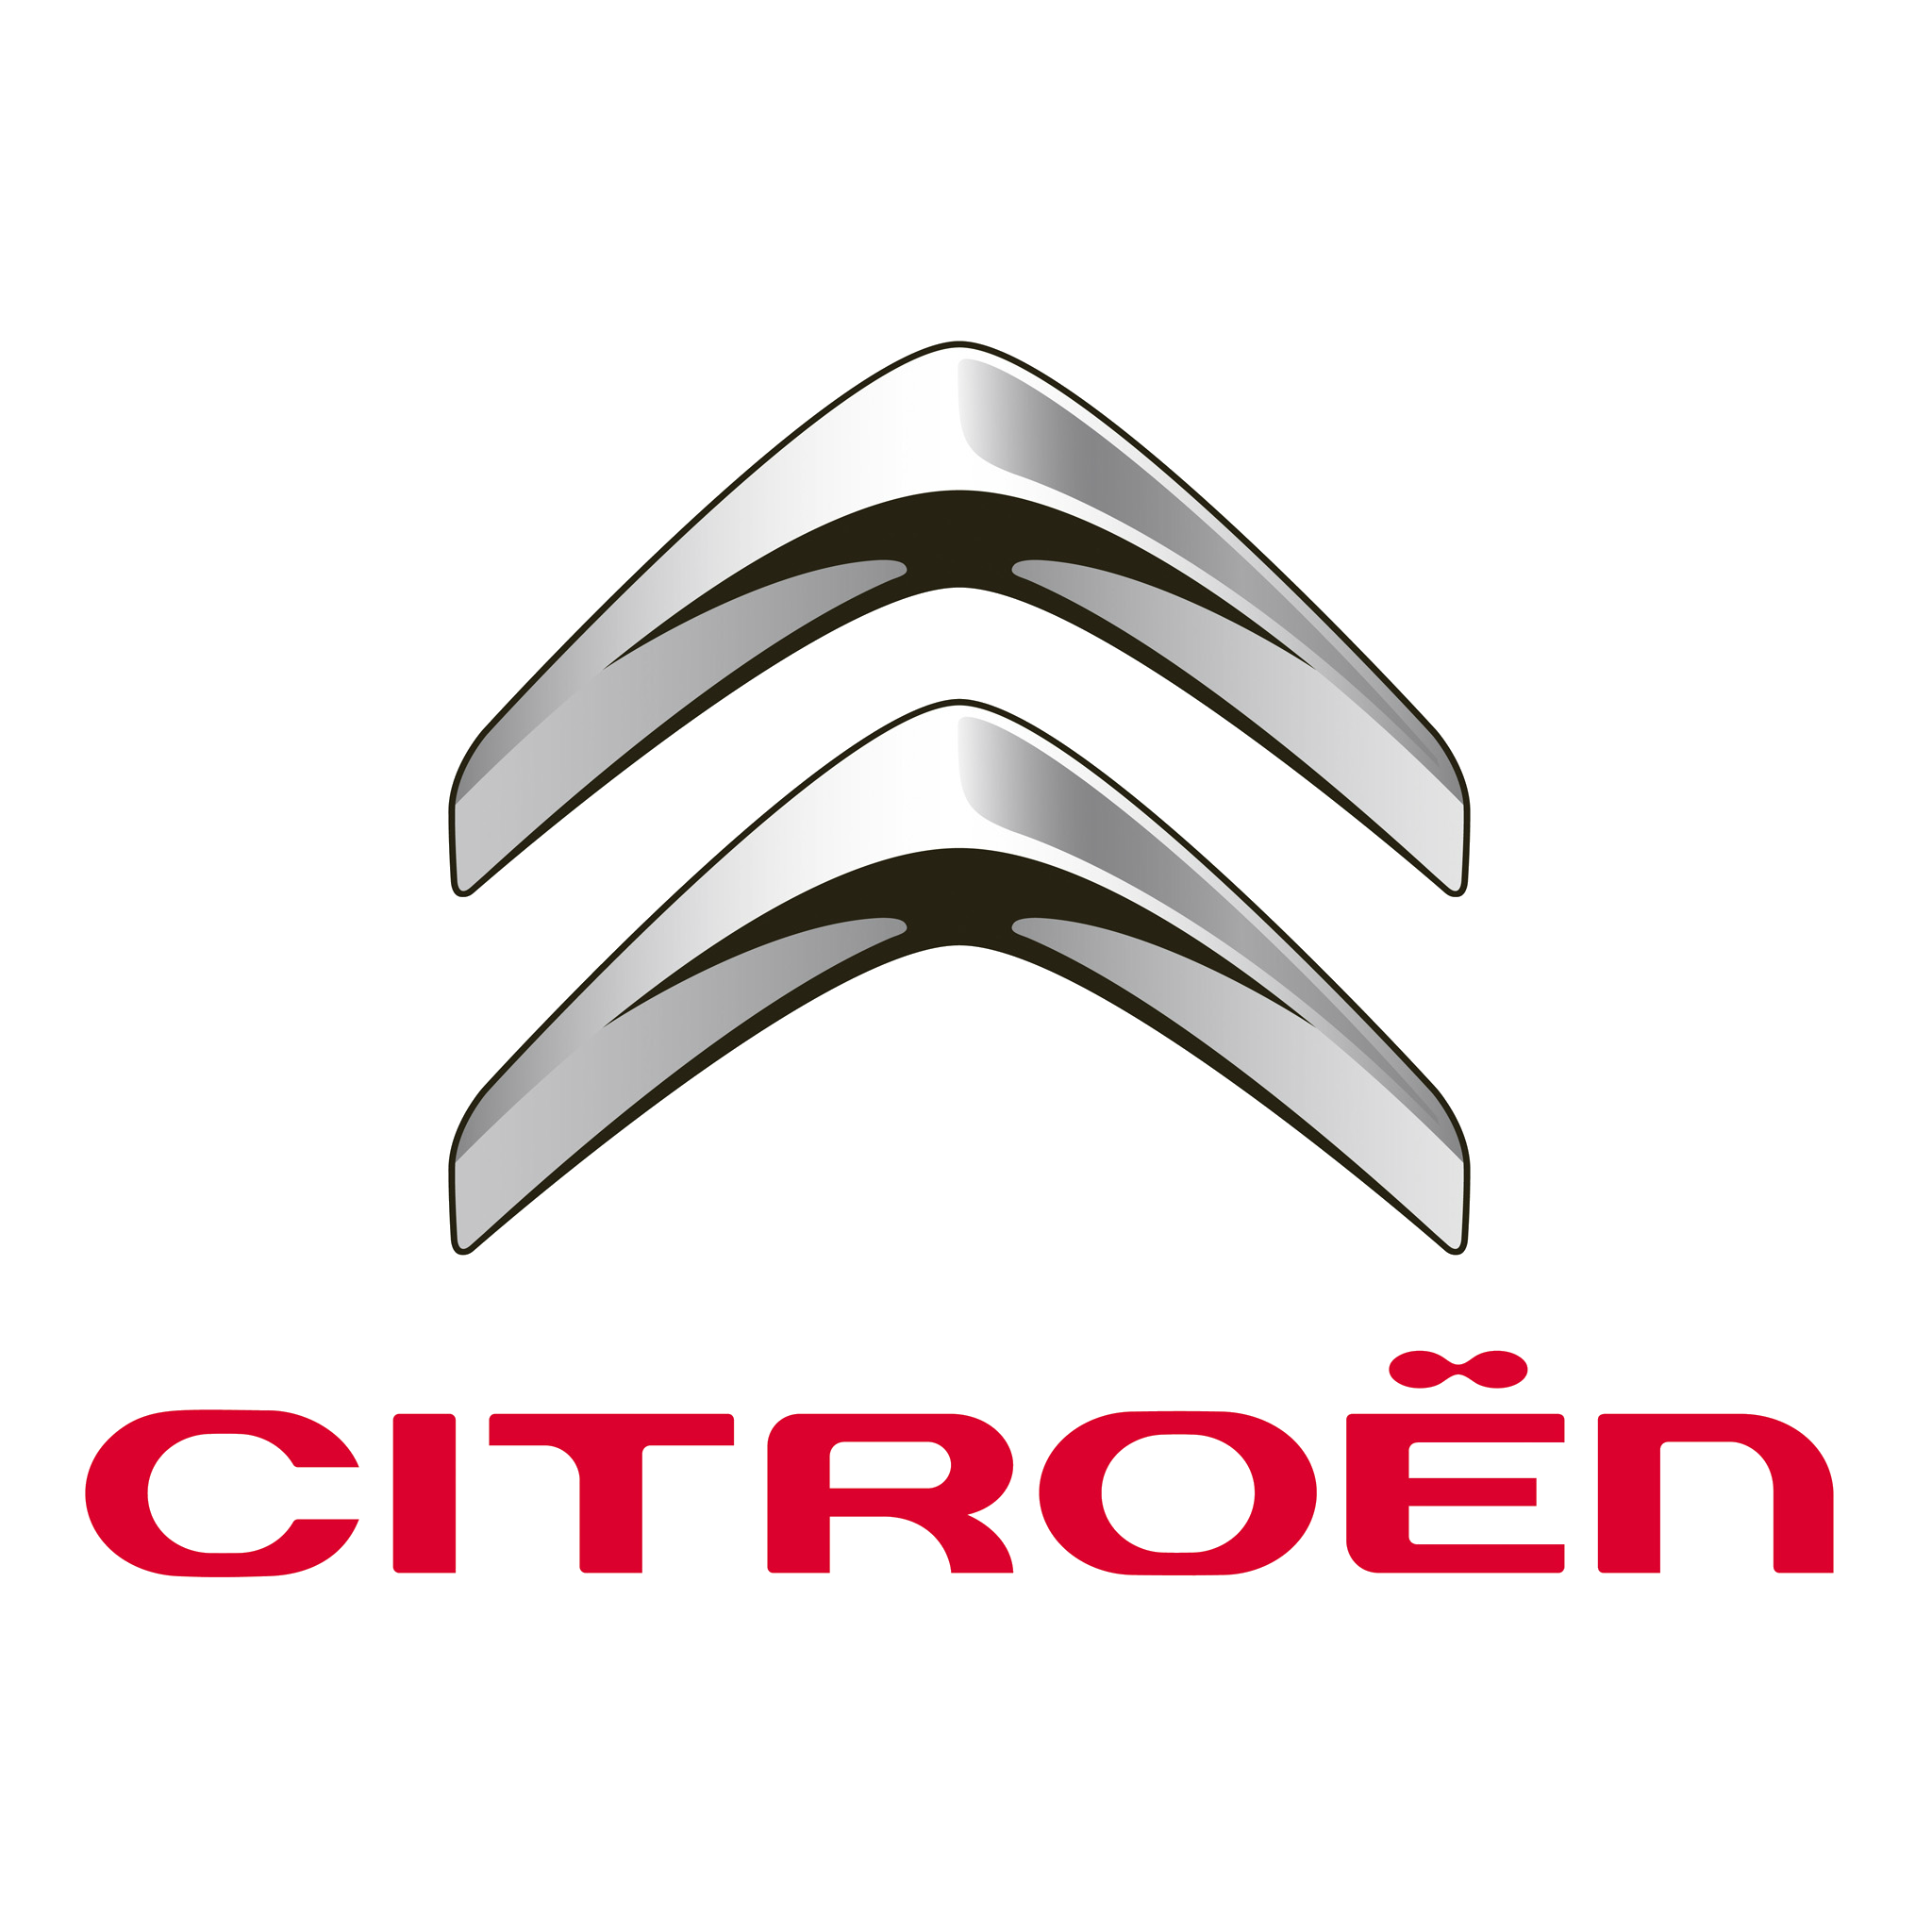 Image result for citroen logo